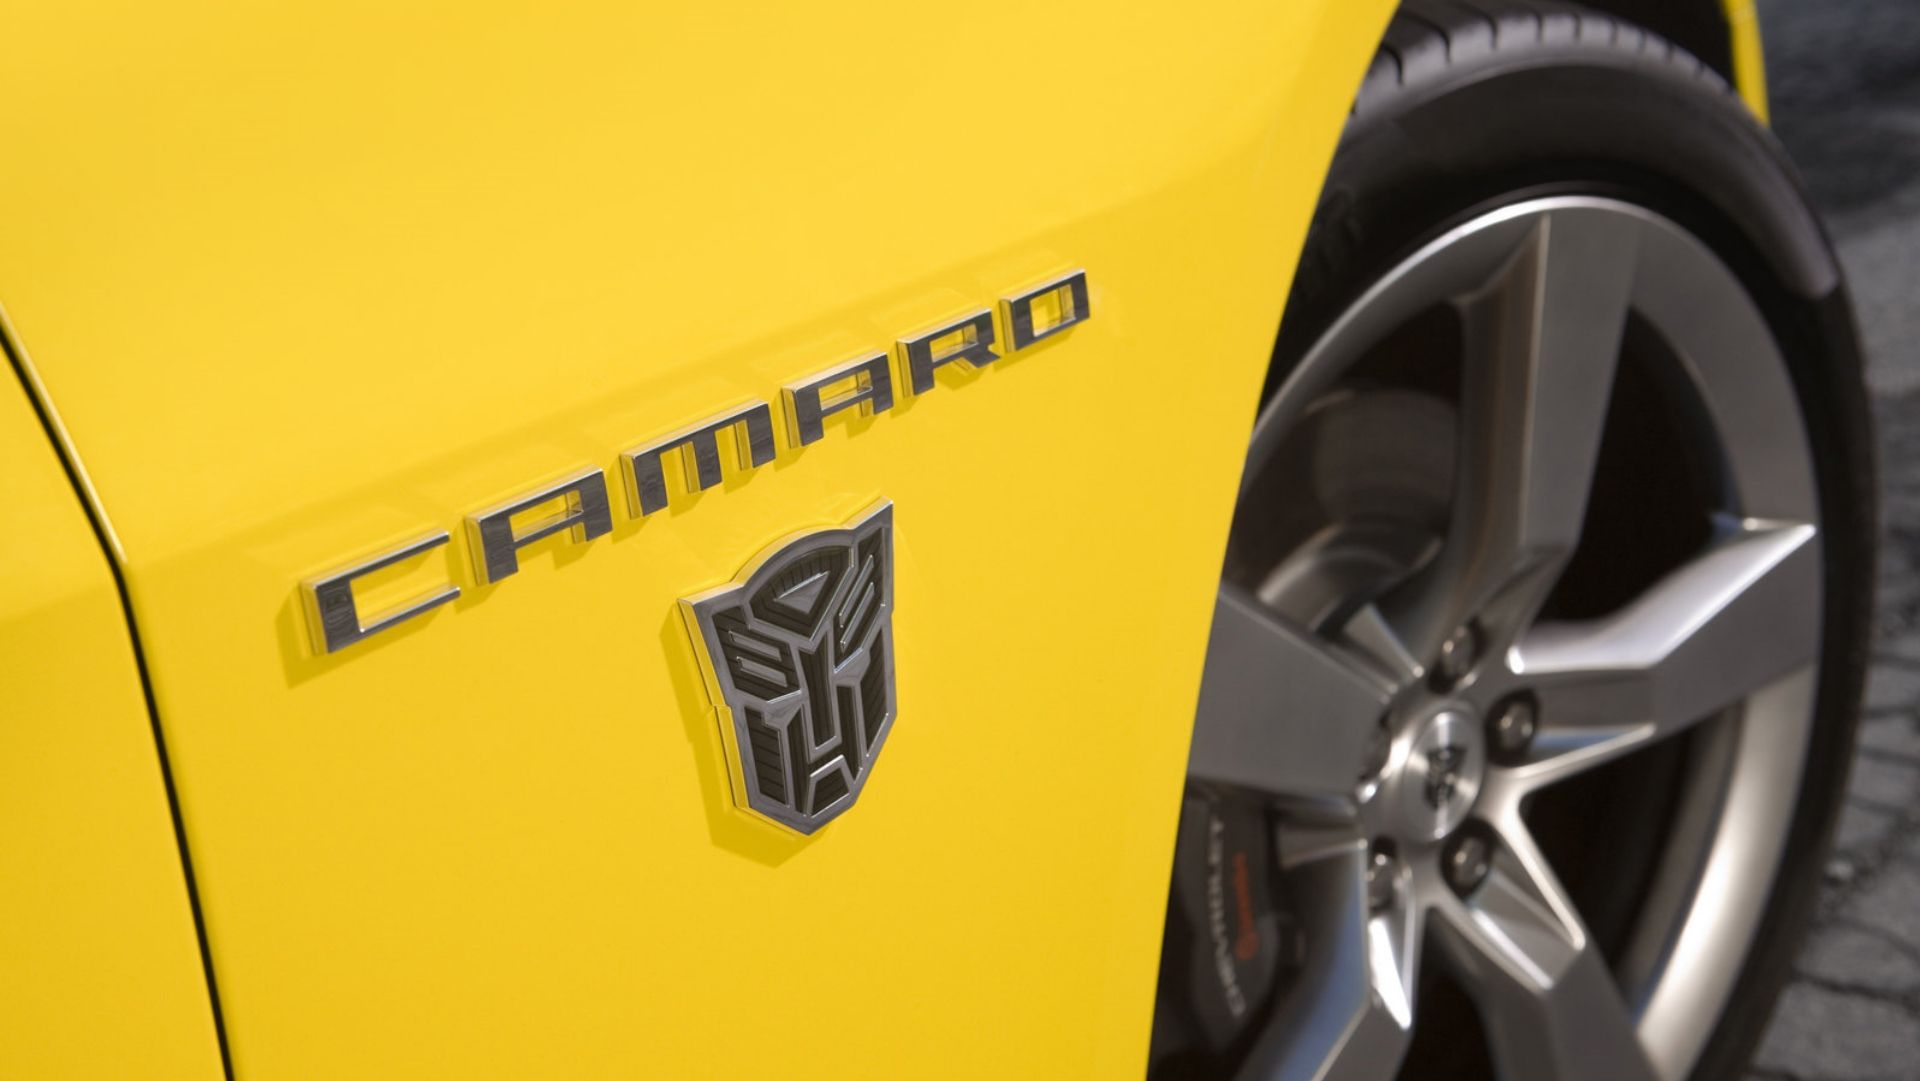 chevrolet camaro transformers edition fender badge close up yellow